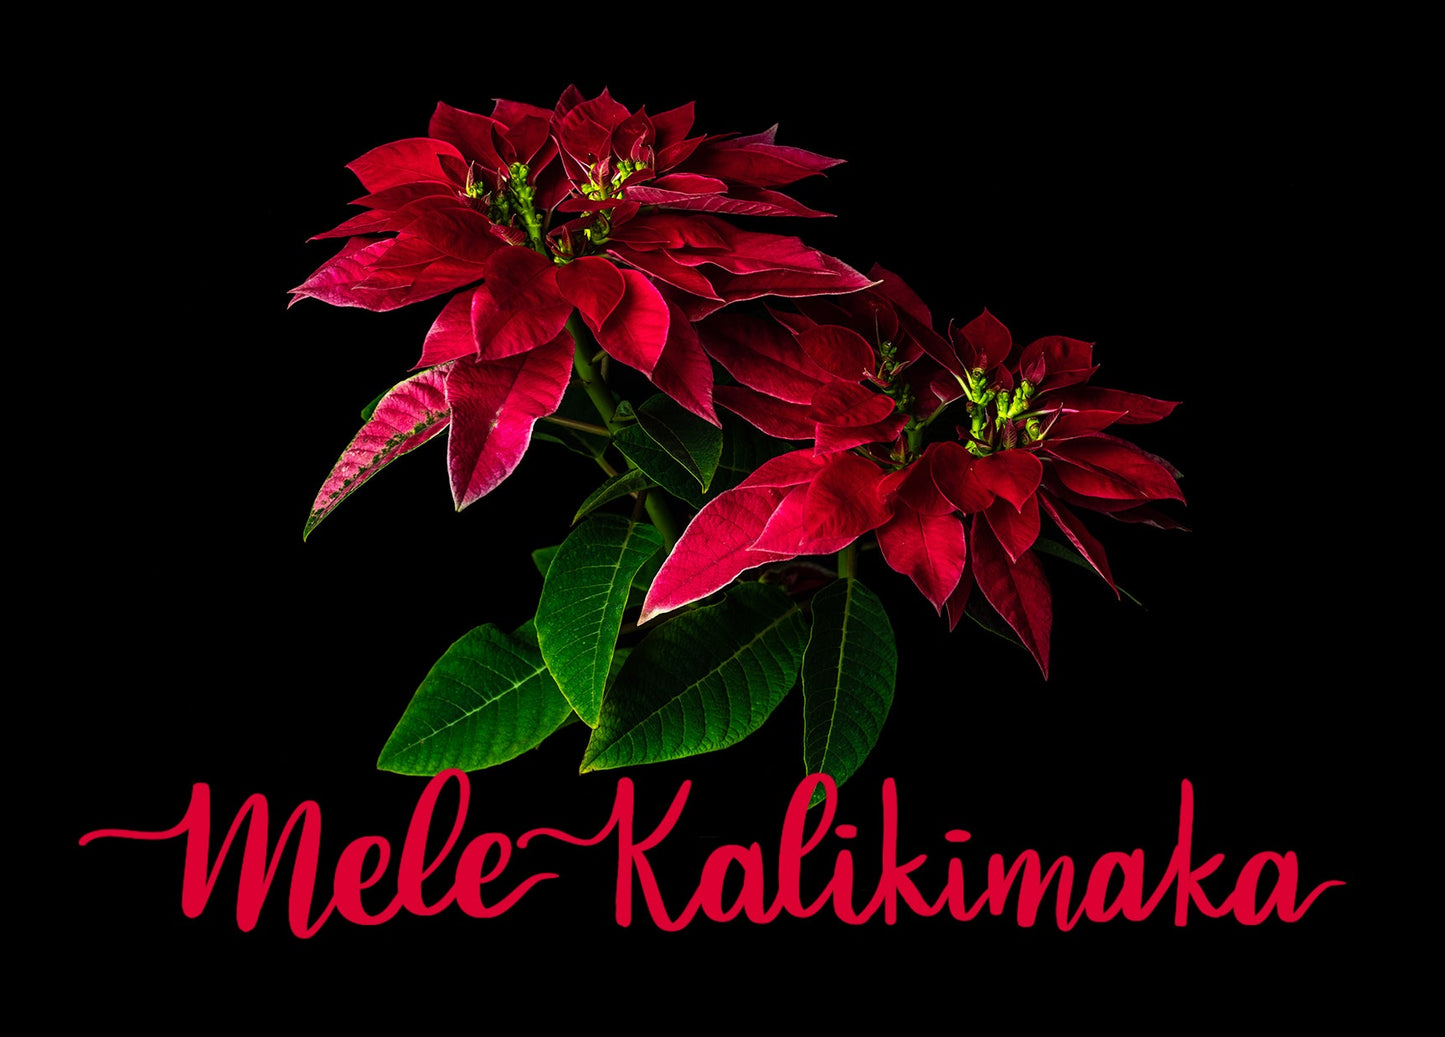 Notecard - Poinsettia Pair - Mele Kalikimaka